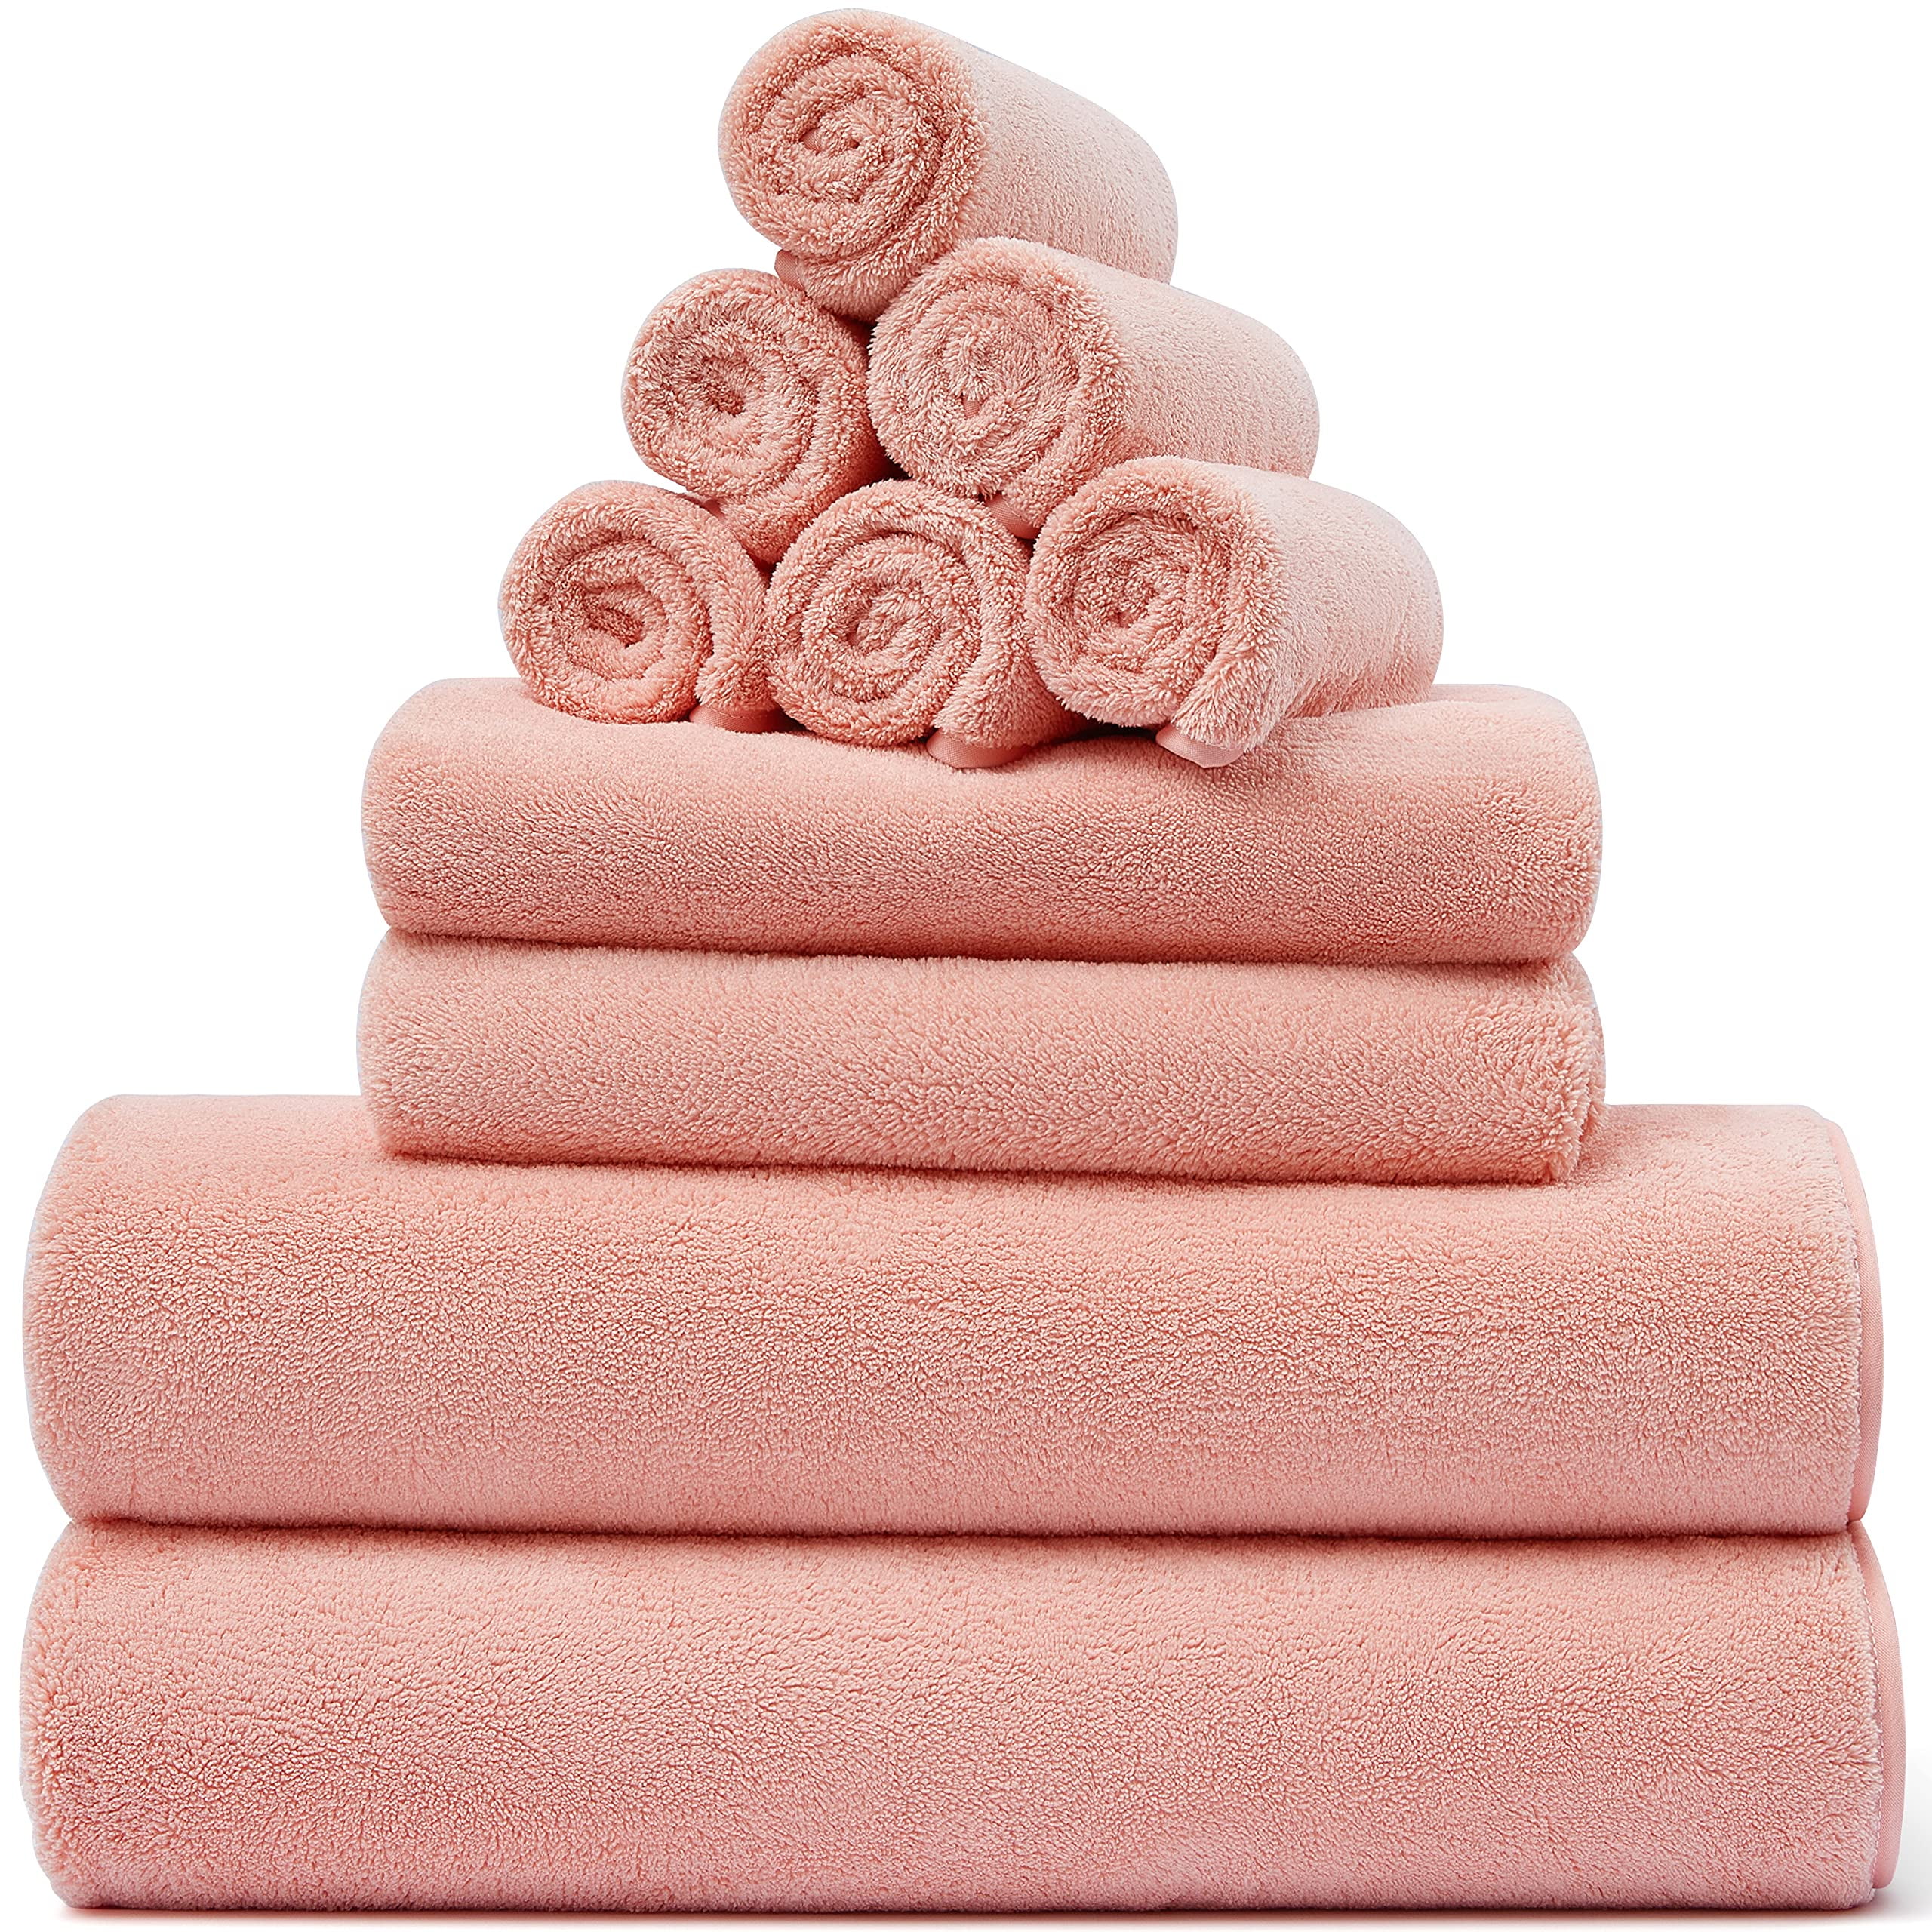 Oversized Bath Towels, Microfiber Shower Towel for Body, Towel